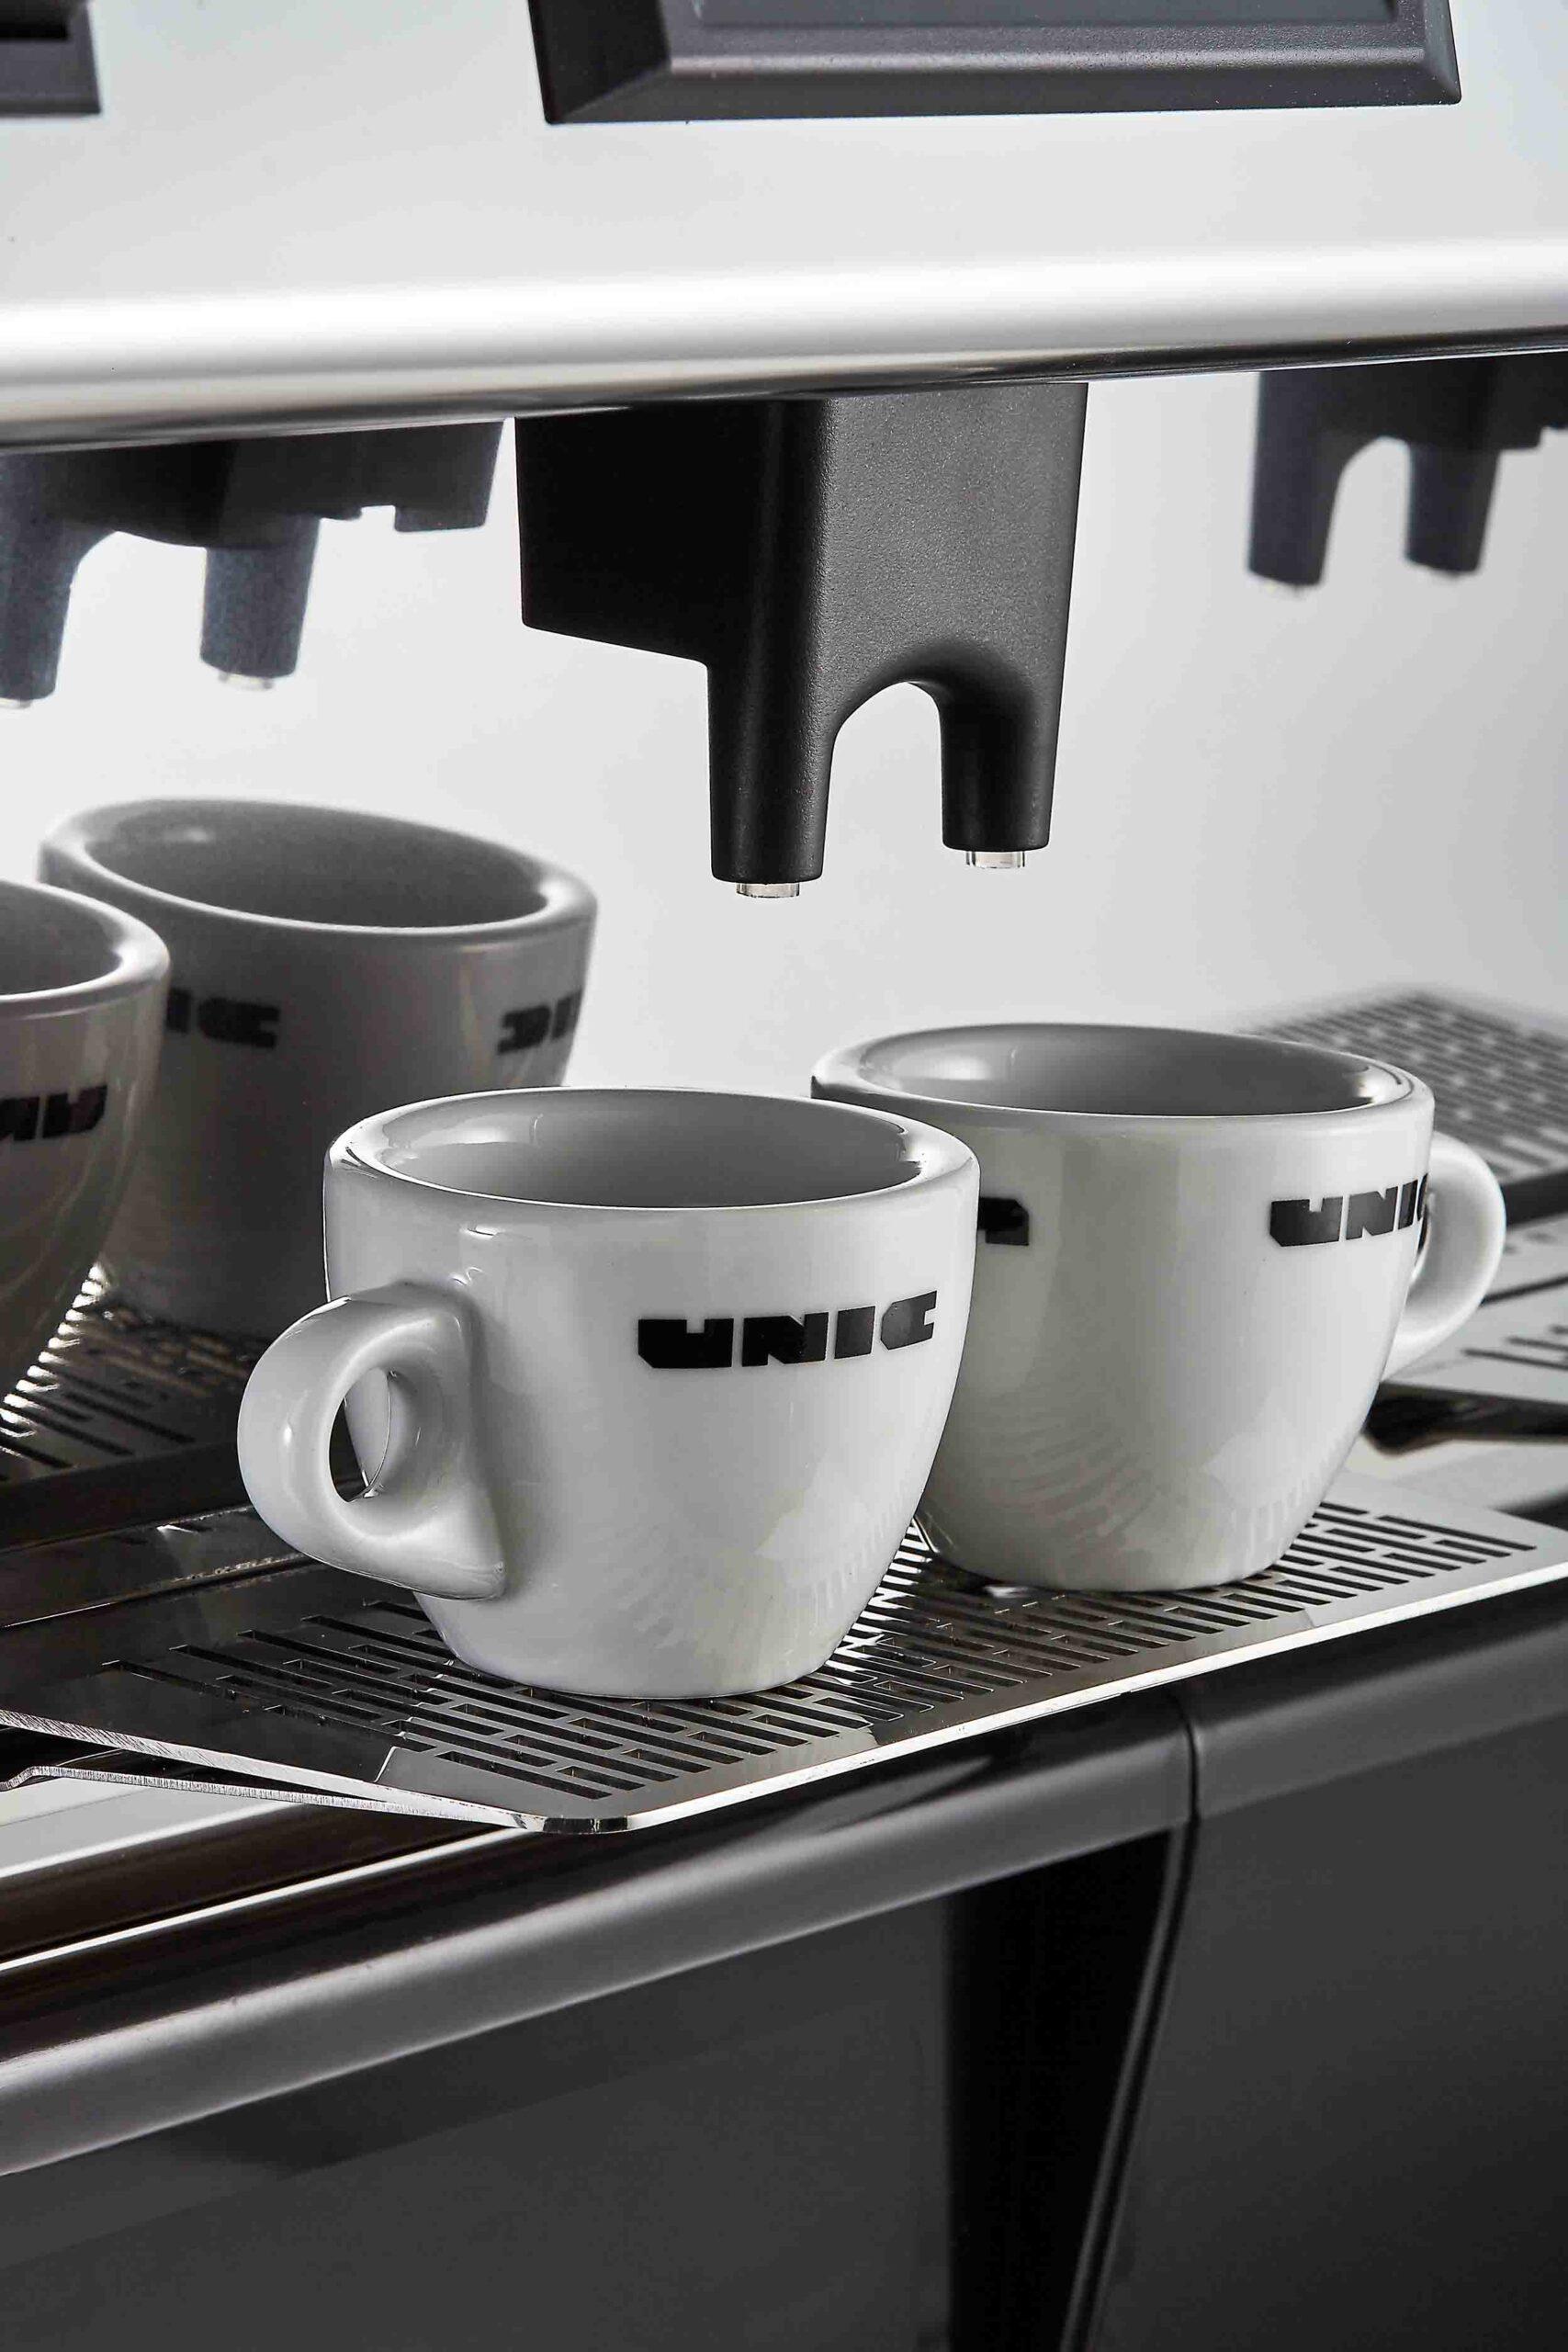 ePOP® ASH - Coffee and Espresso Pod Machine